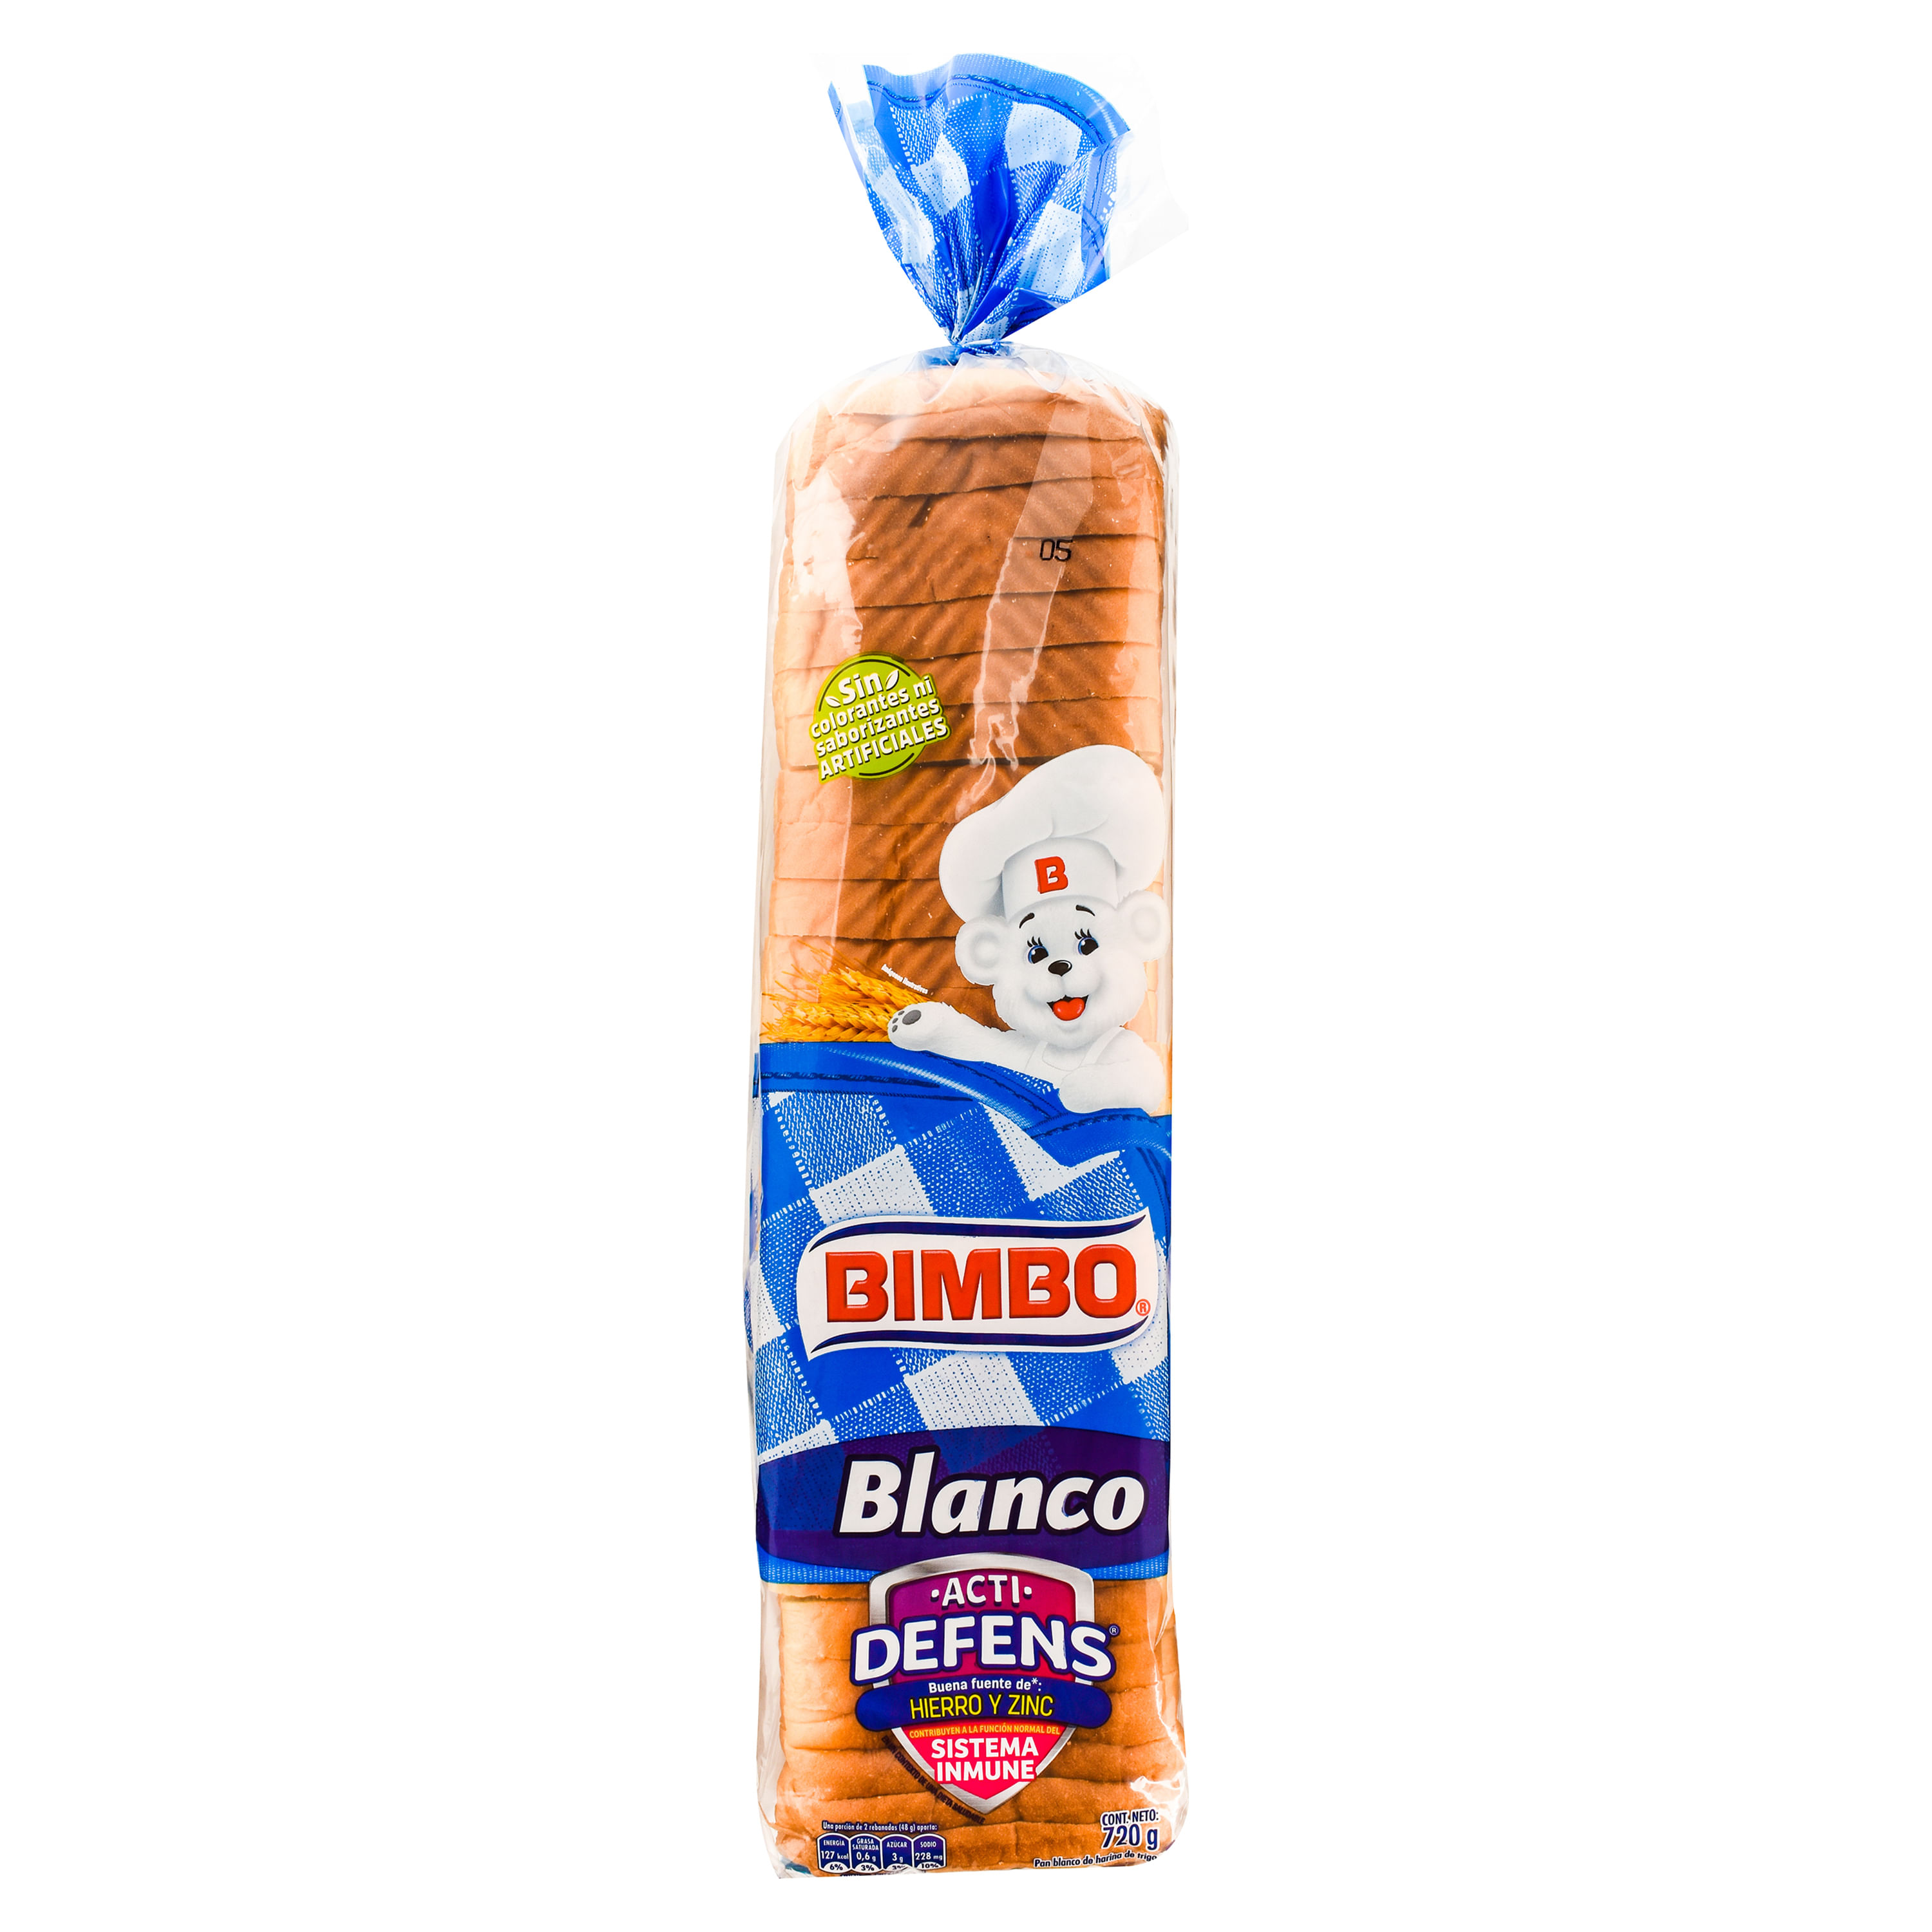 Pan de molde Bimbo® blanco familiar